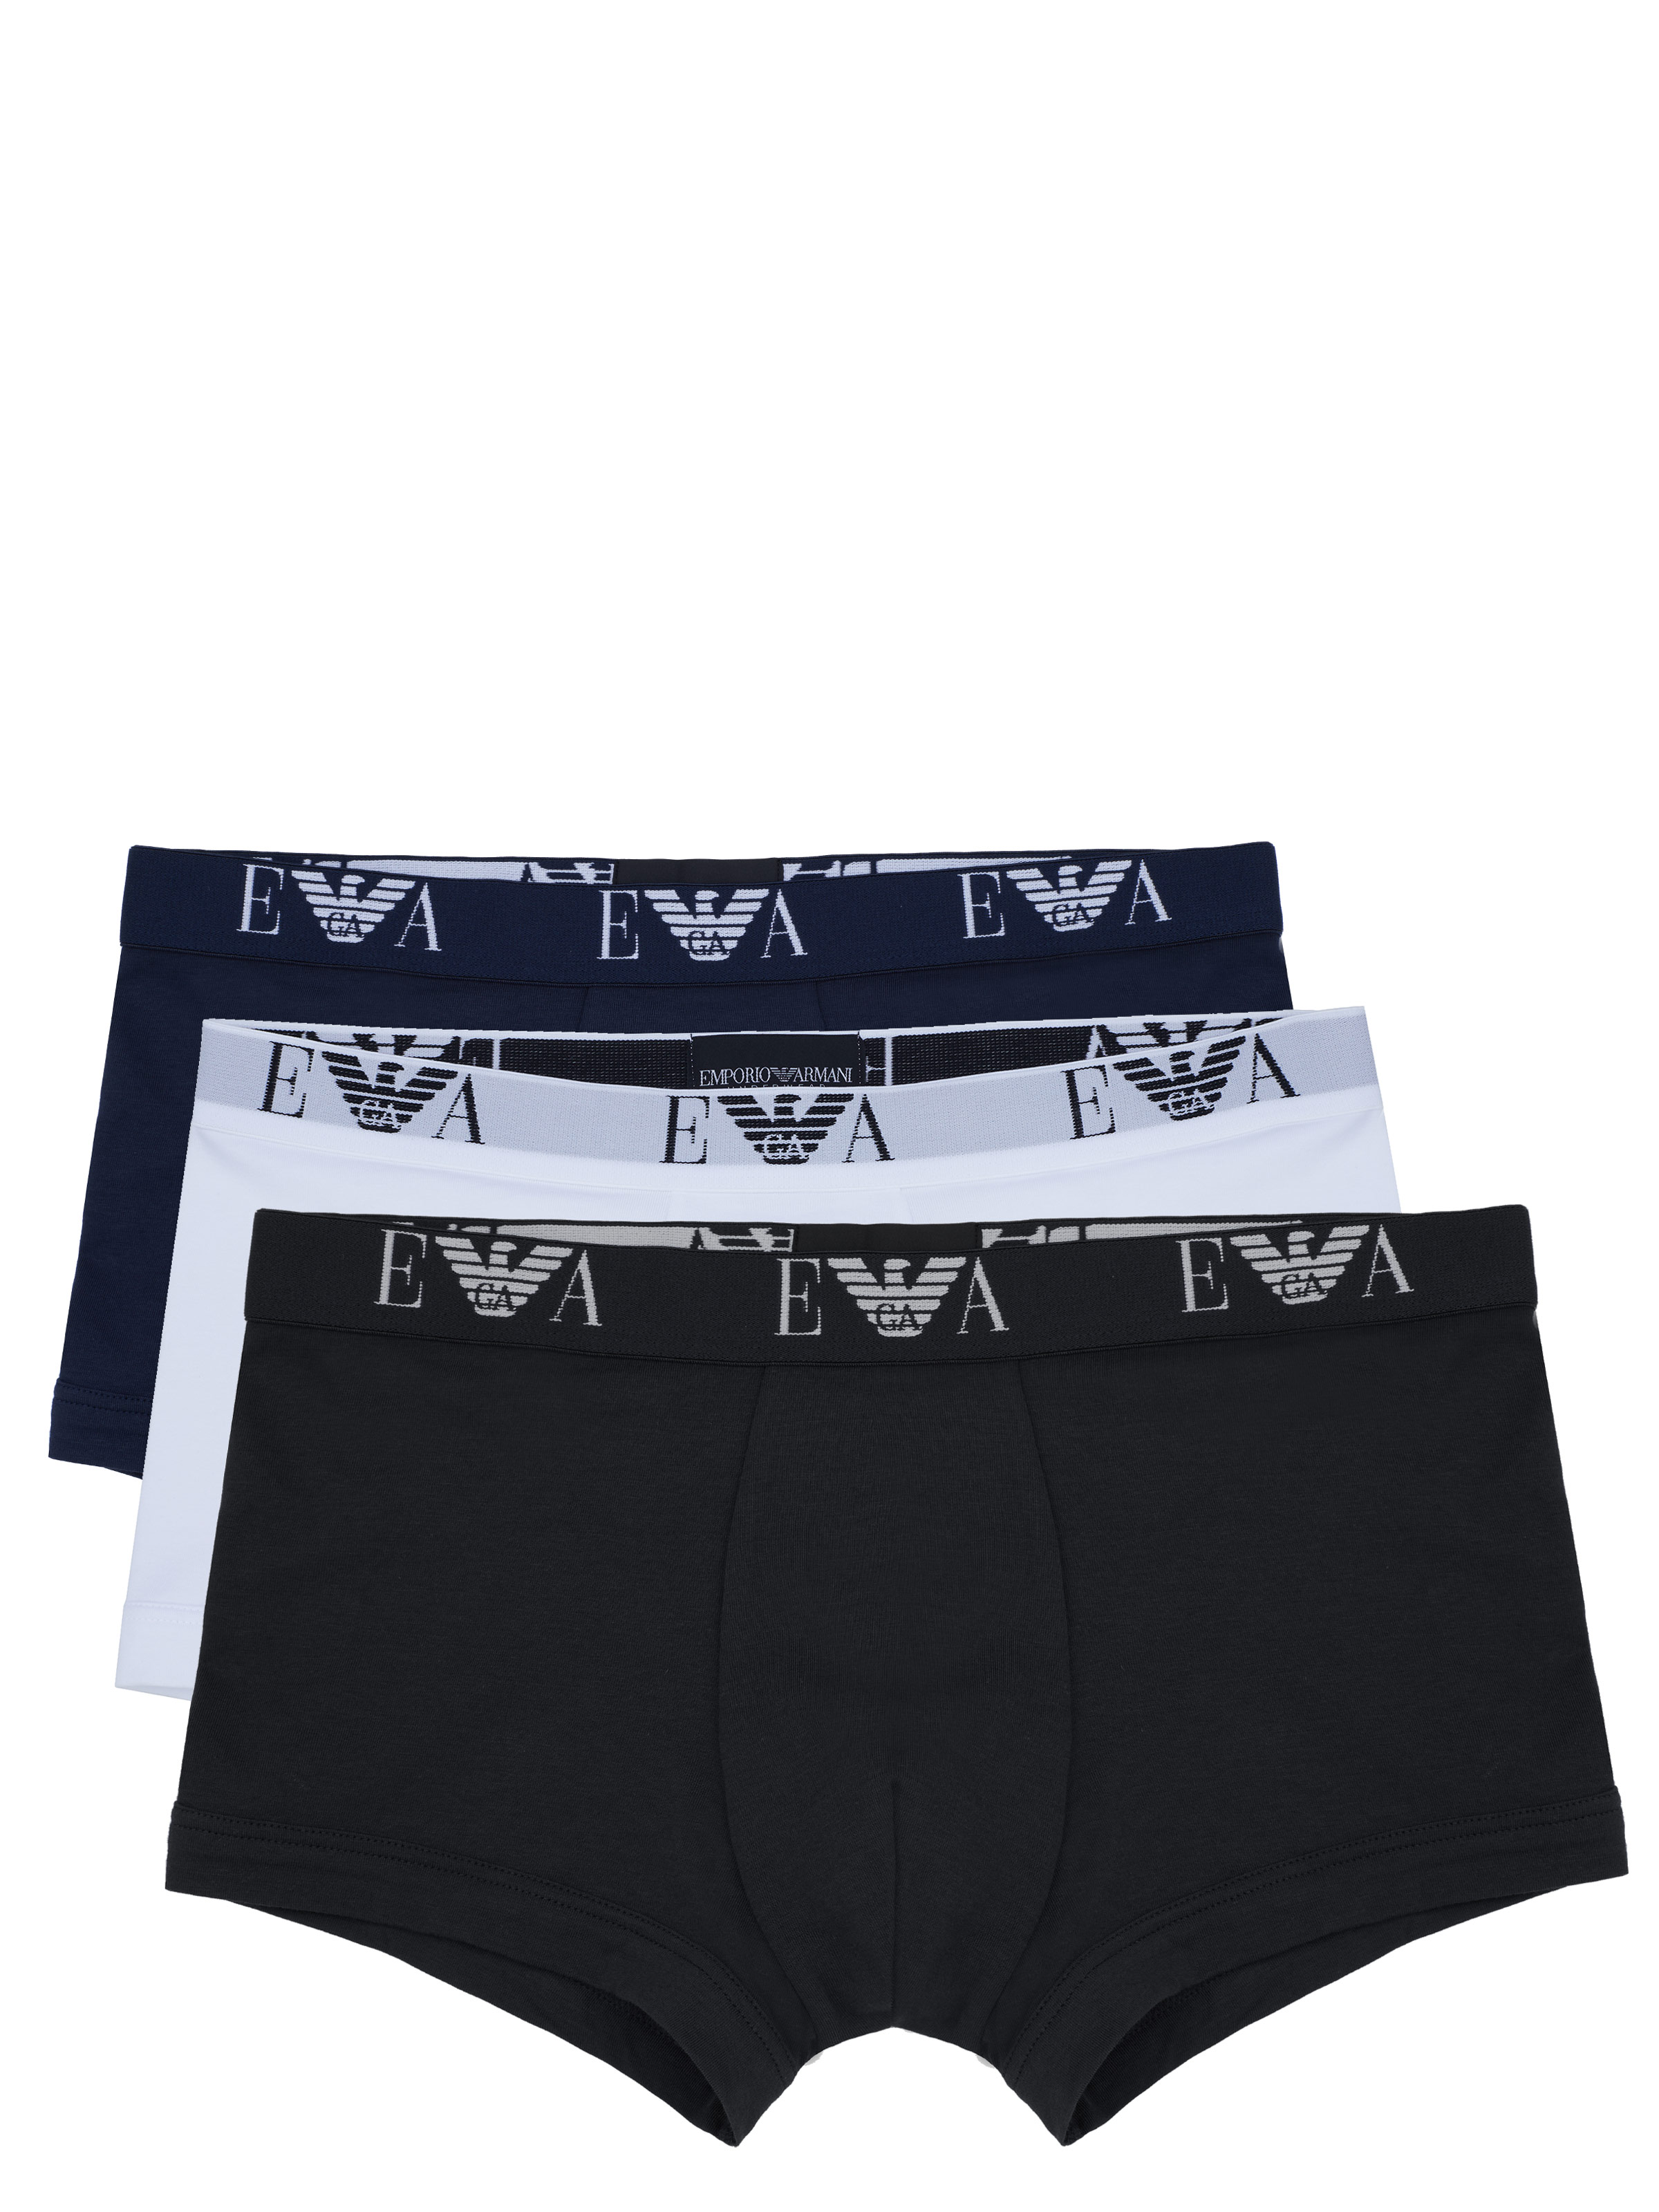 Emporio Armani underwear 3 Pack black / marine / white Multi